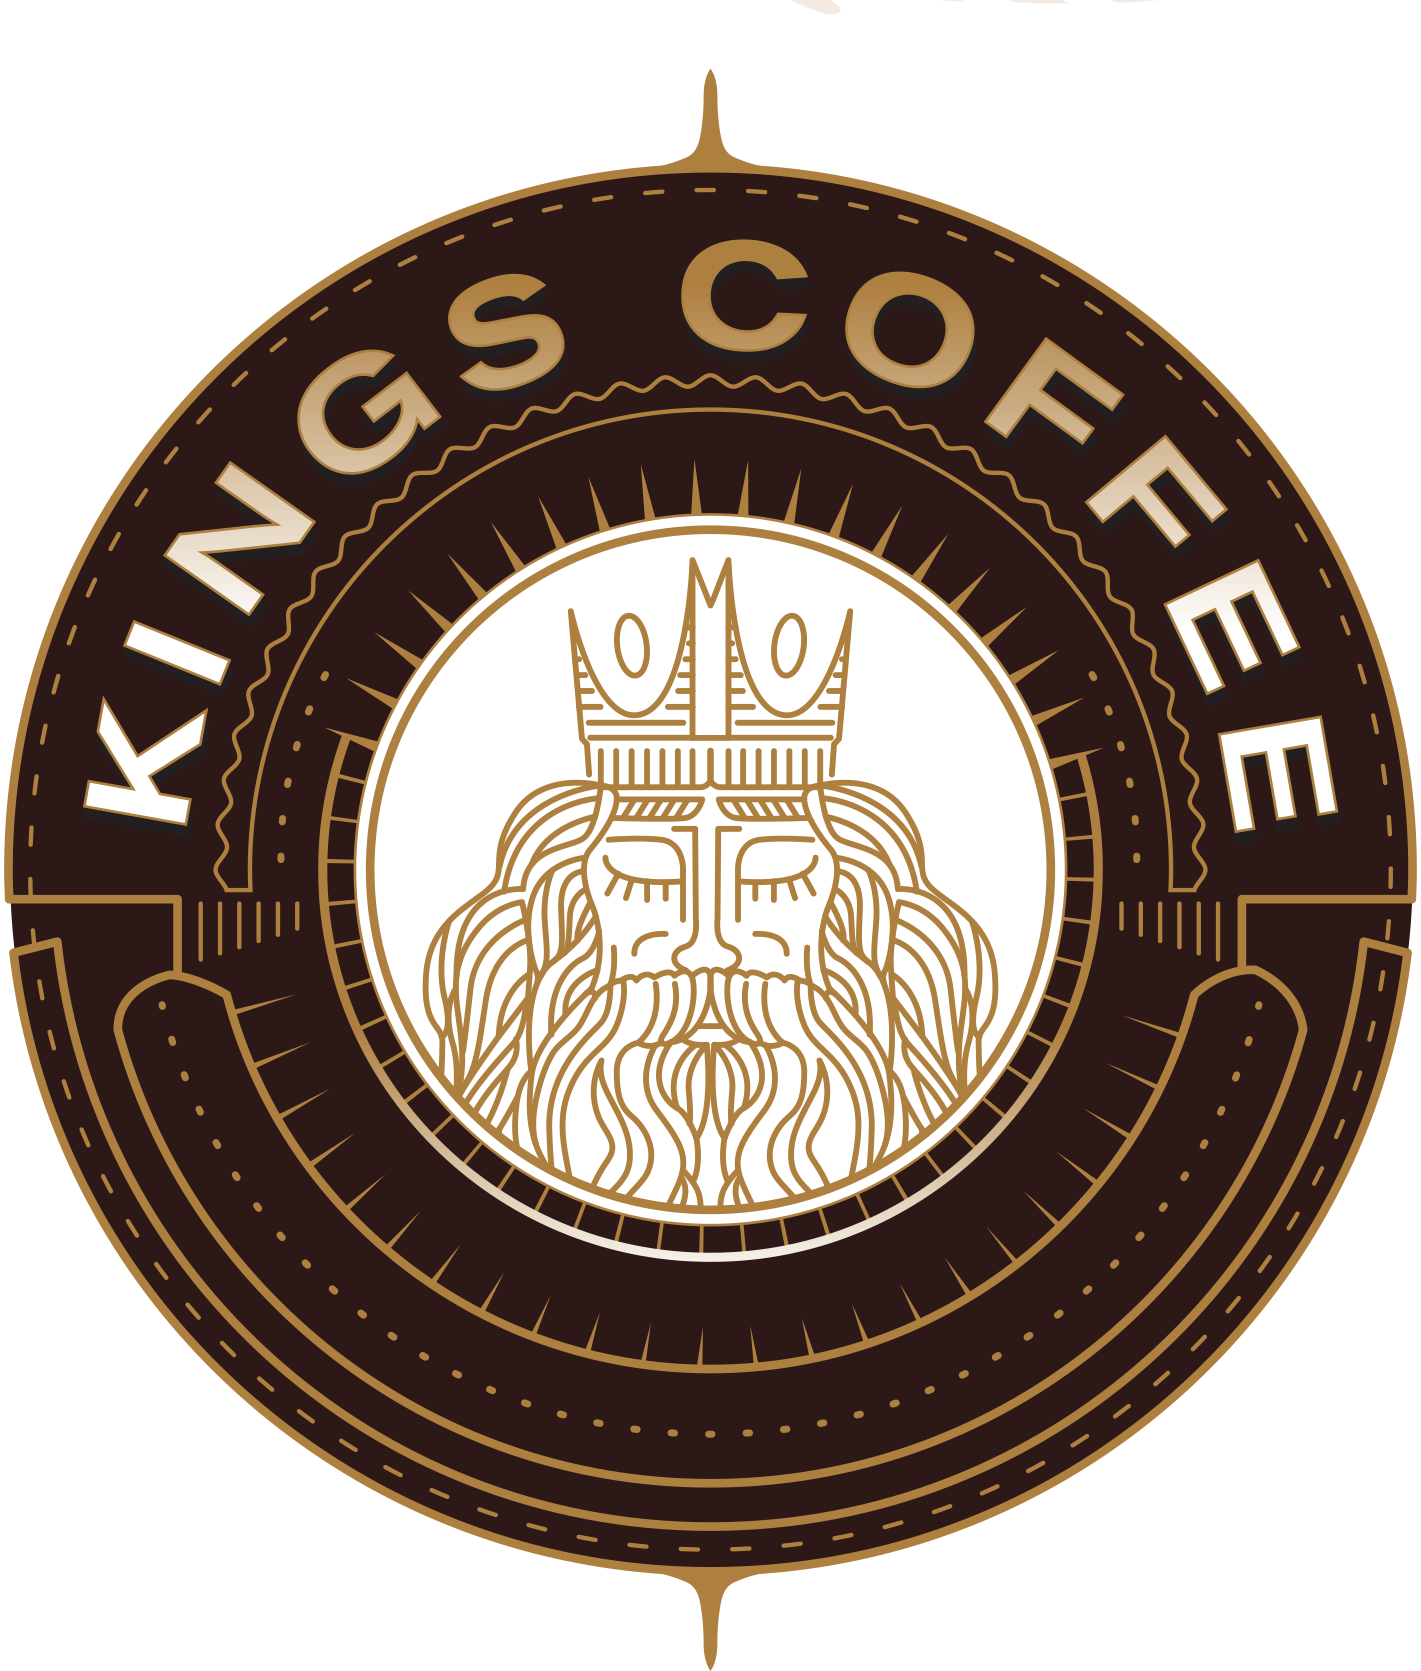 Kings Coffee - The King of Coffee Arrives